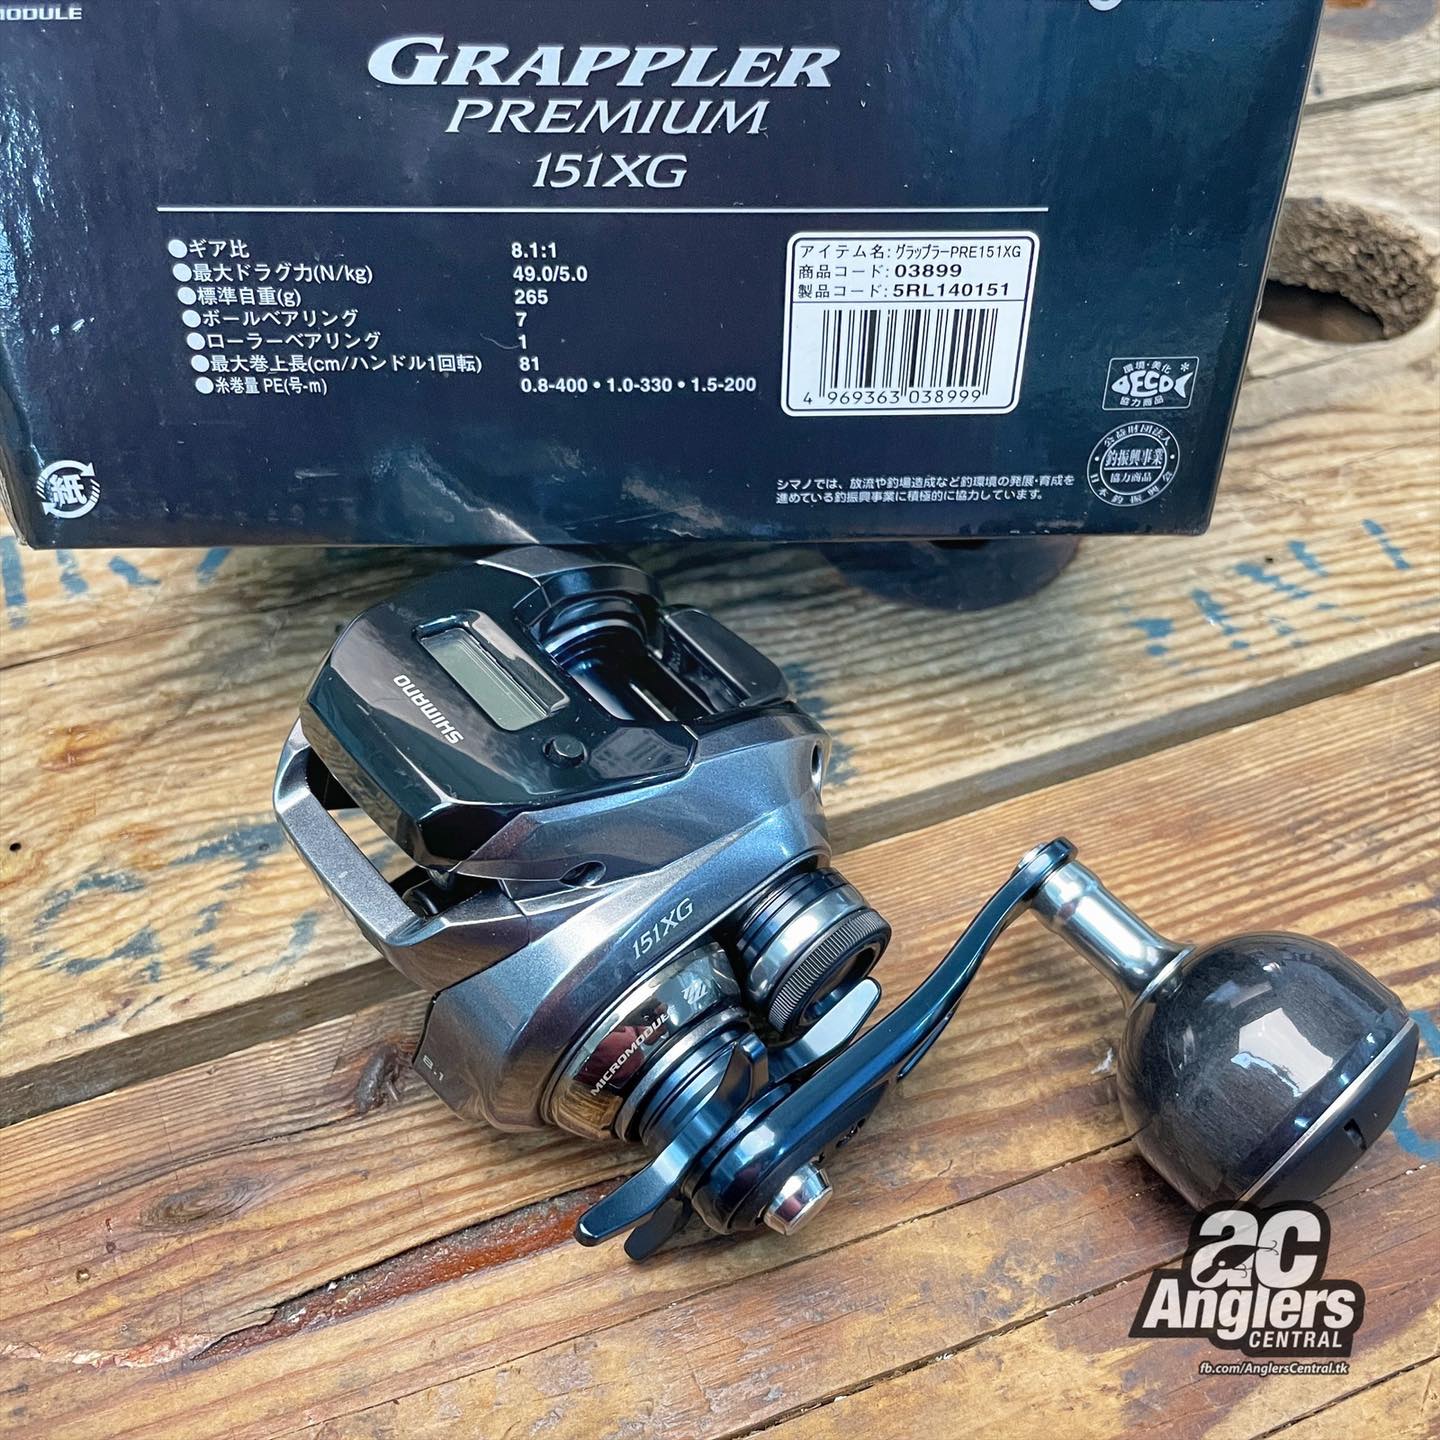 2018 Grappler Premium 151XG (USED, 9.5/10)